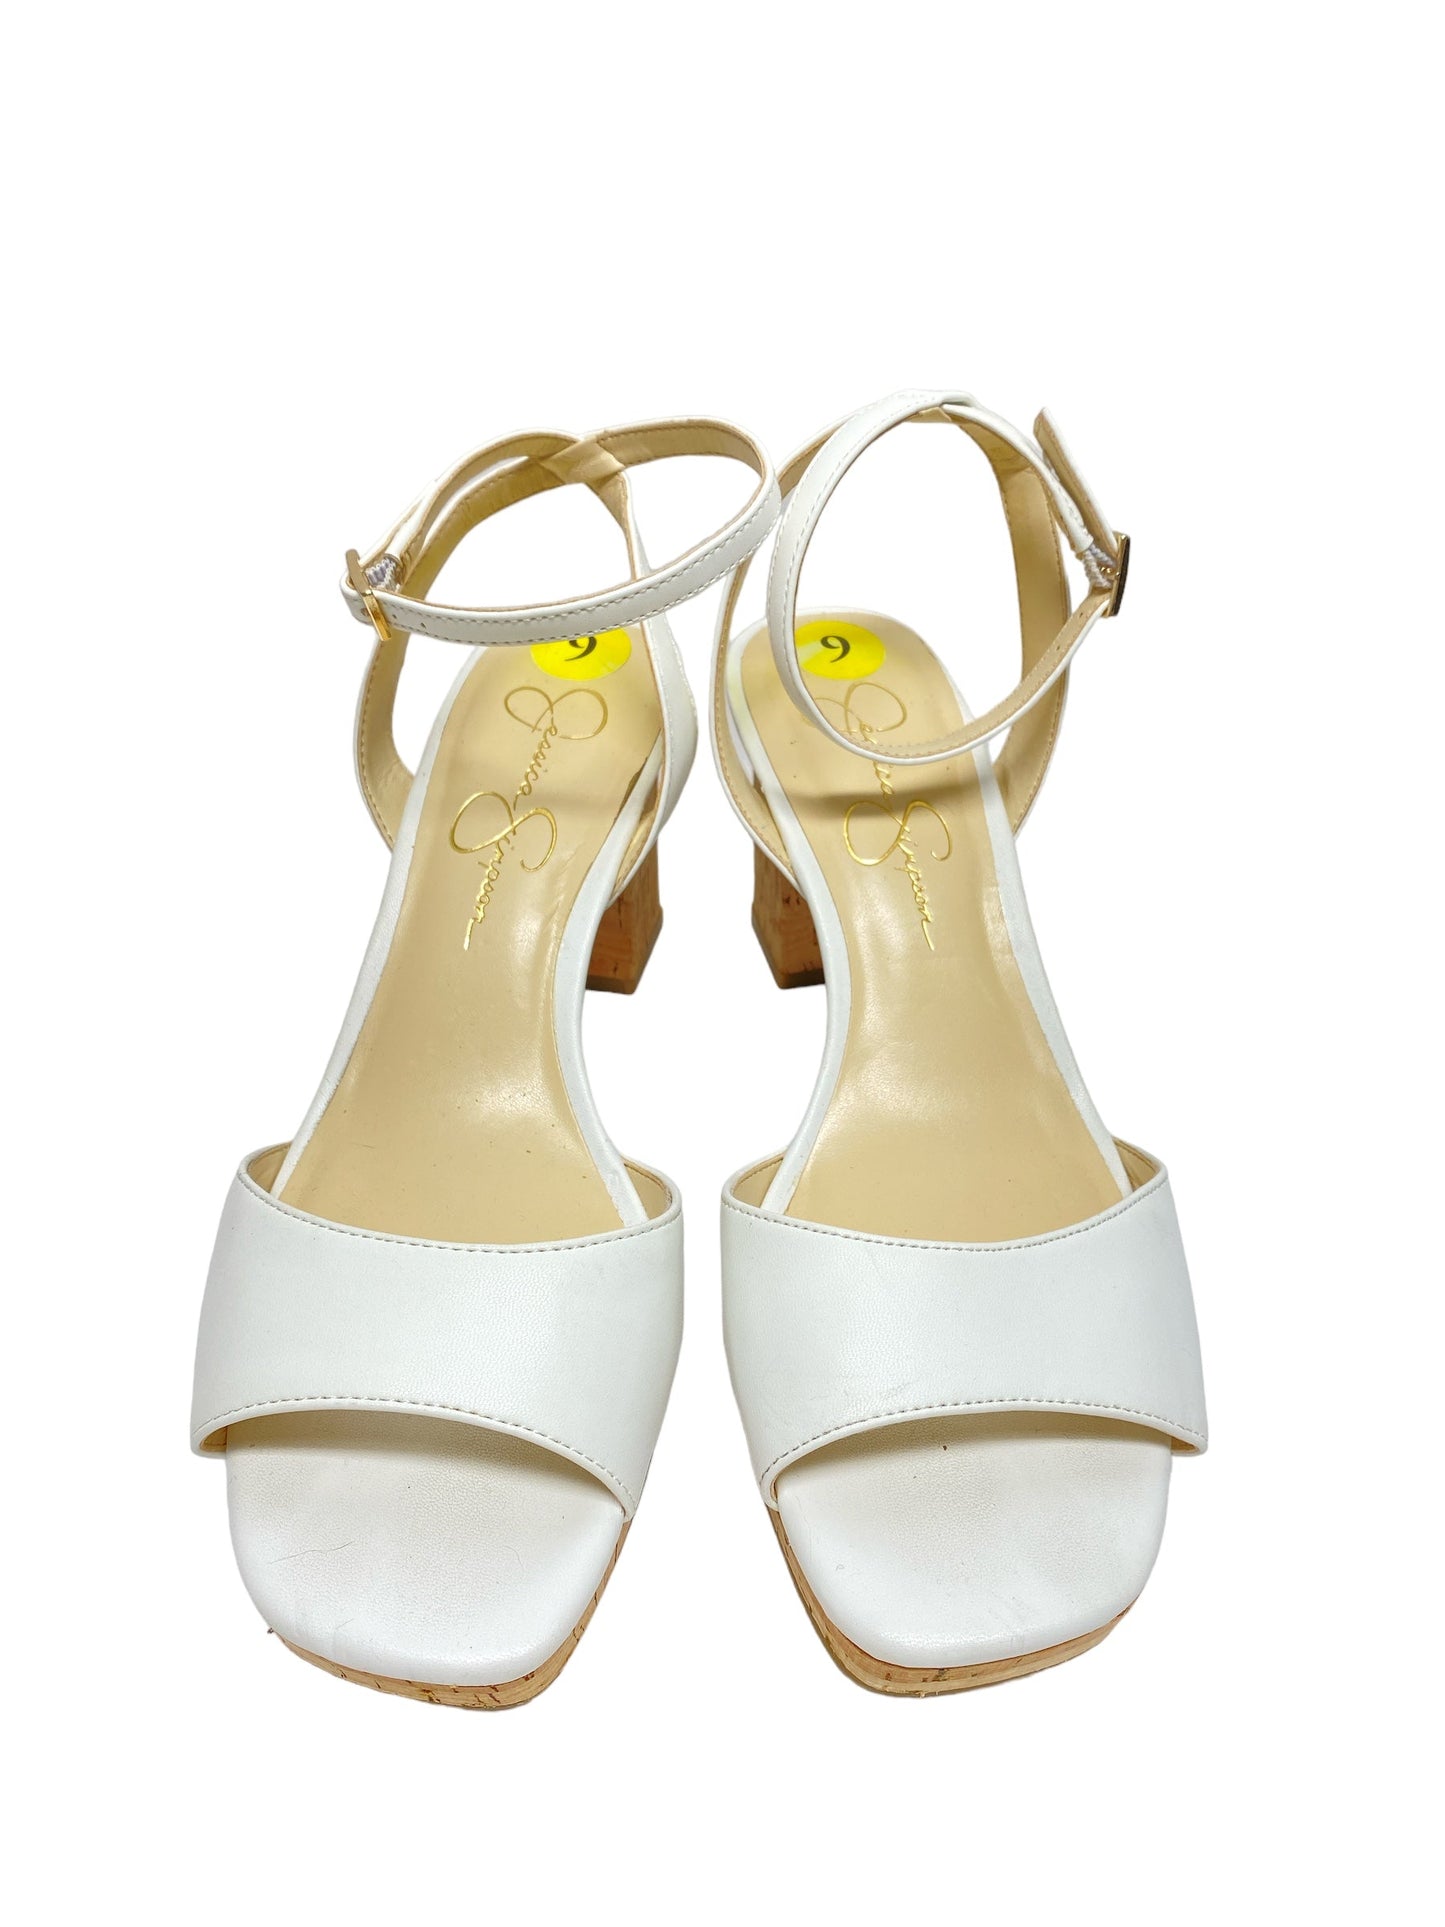 Sandals Heels Block By Jessica Simpson  Size: 9